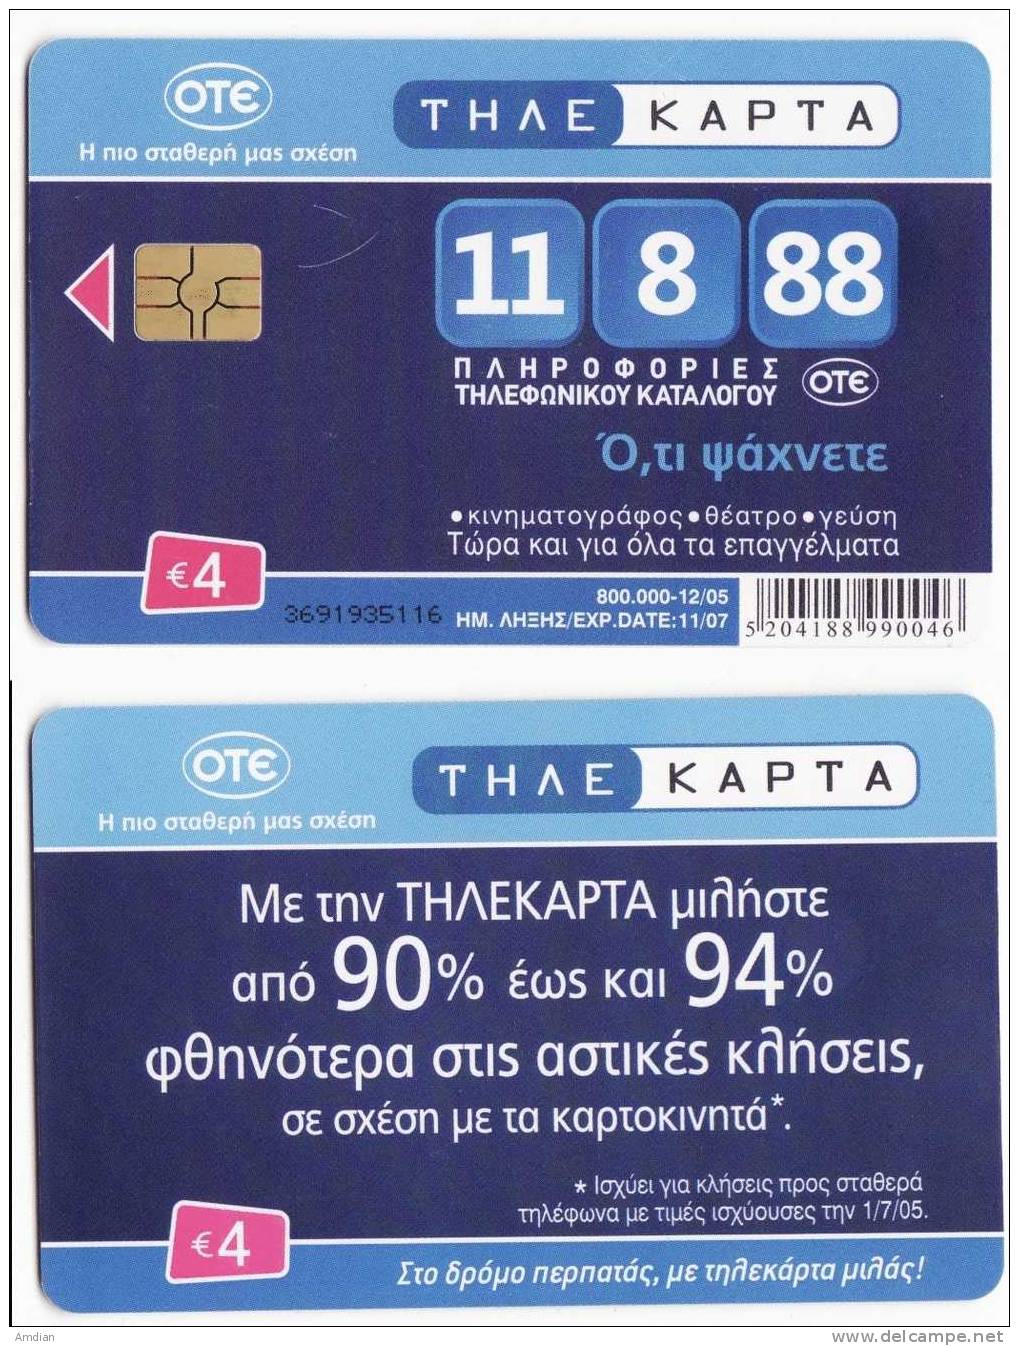 GREECE/GRECE - OTE - Telecoms Company Promotion - 12/2005 - Tirage 800000 - Phonecard / Telecarte - Griekenland